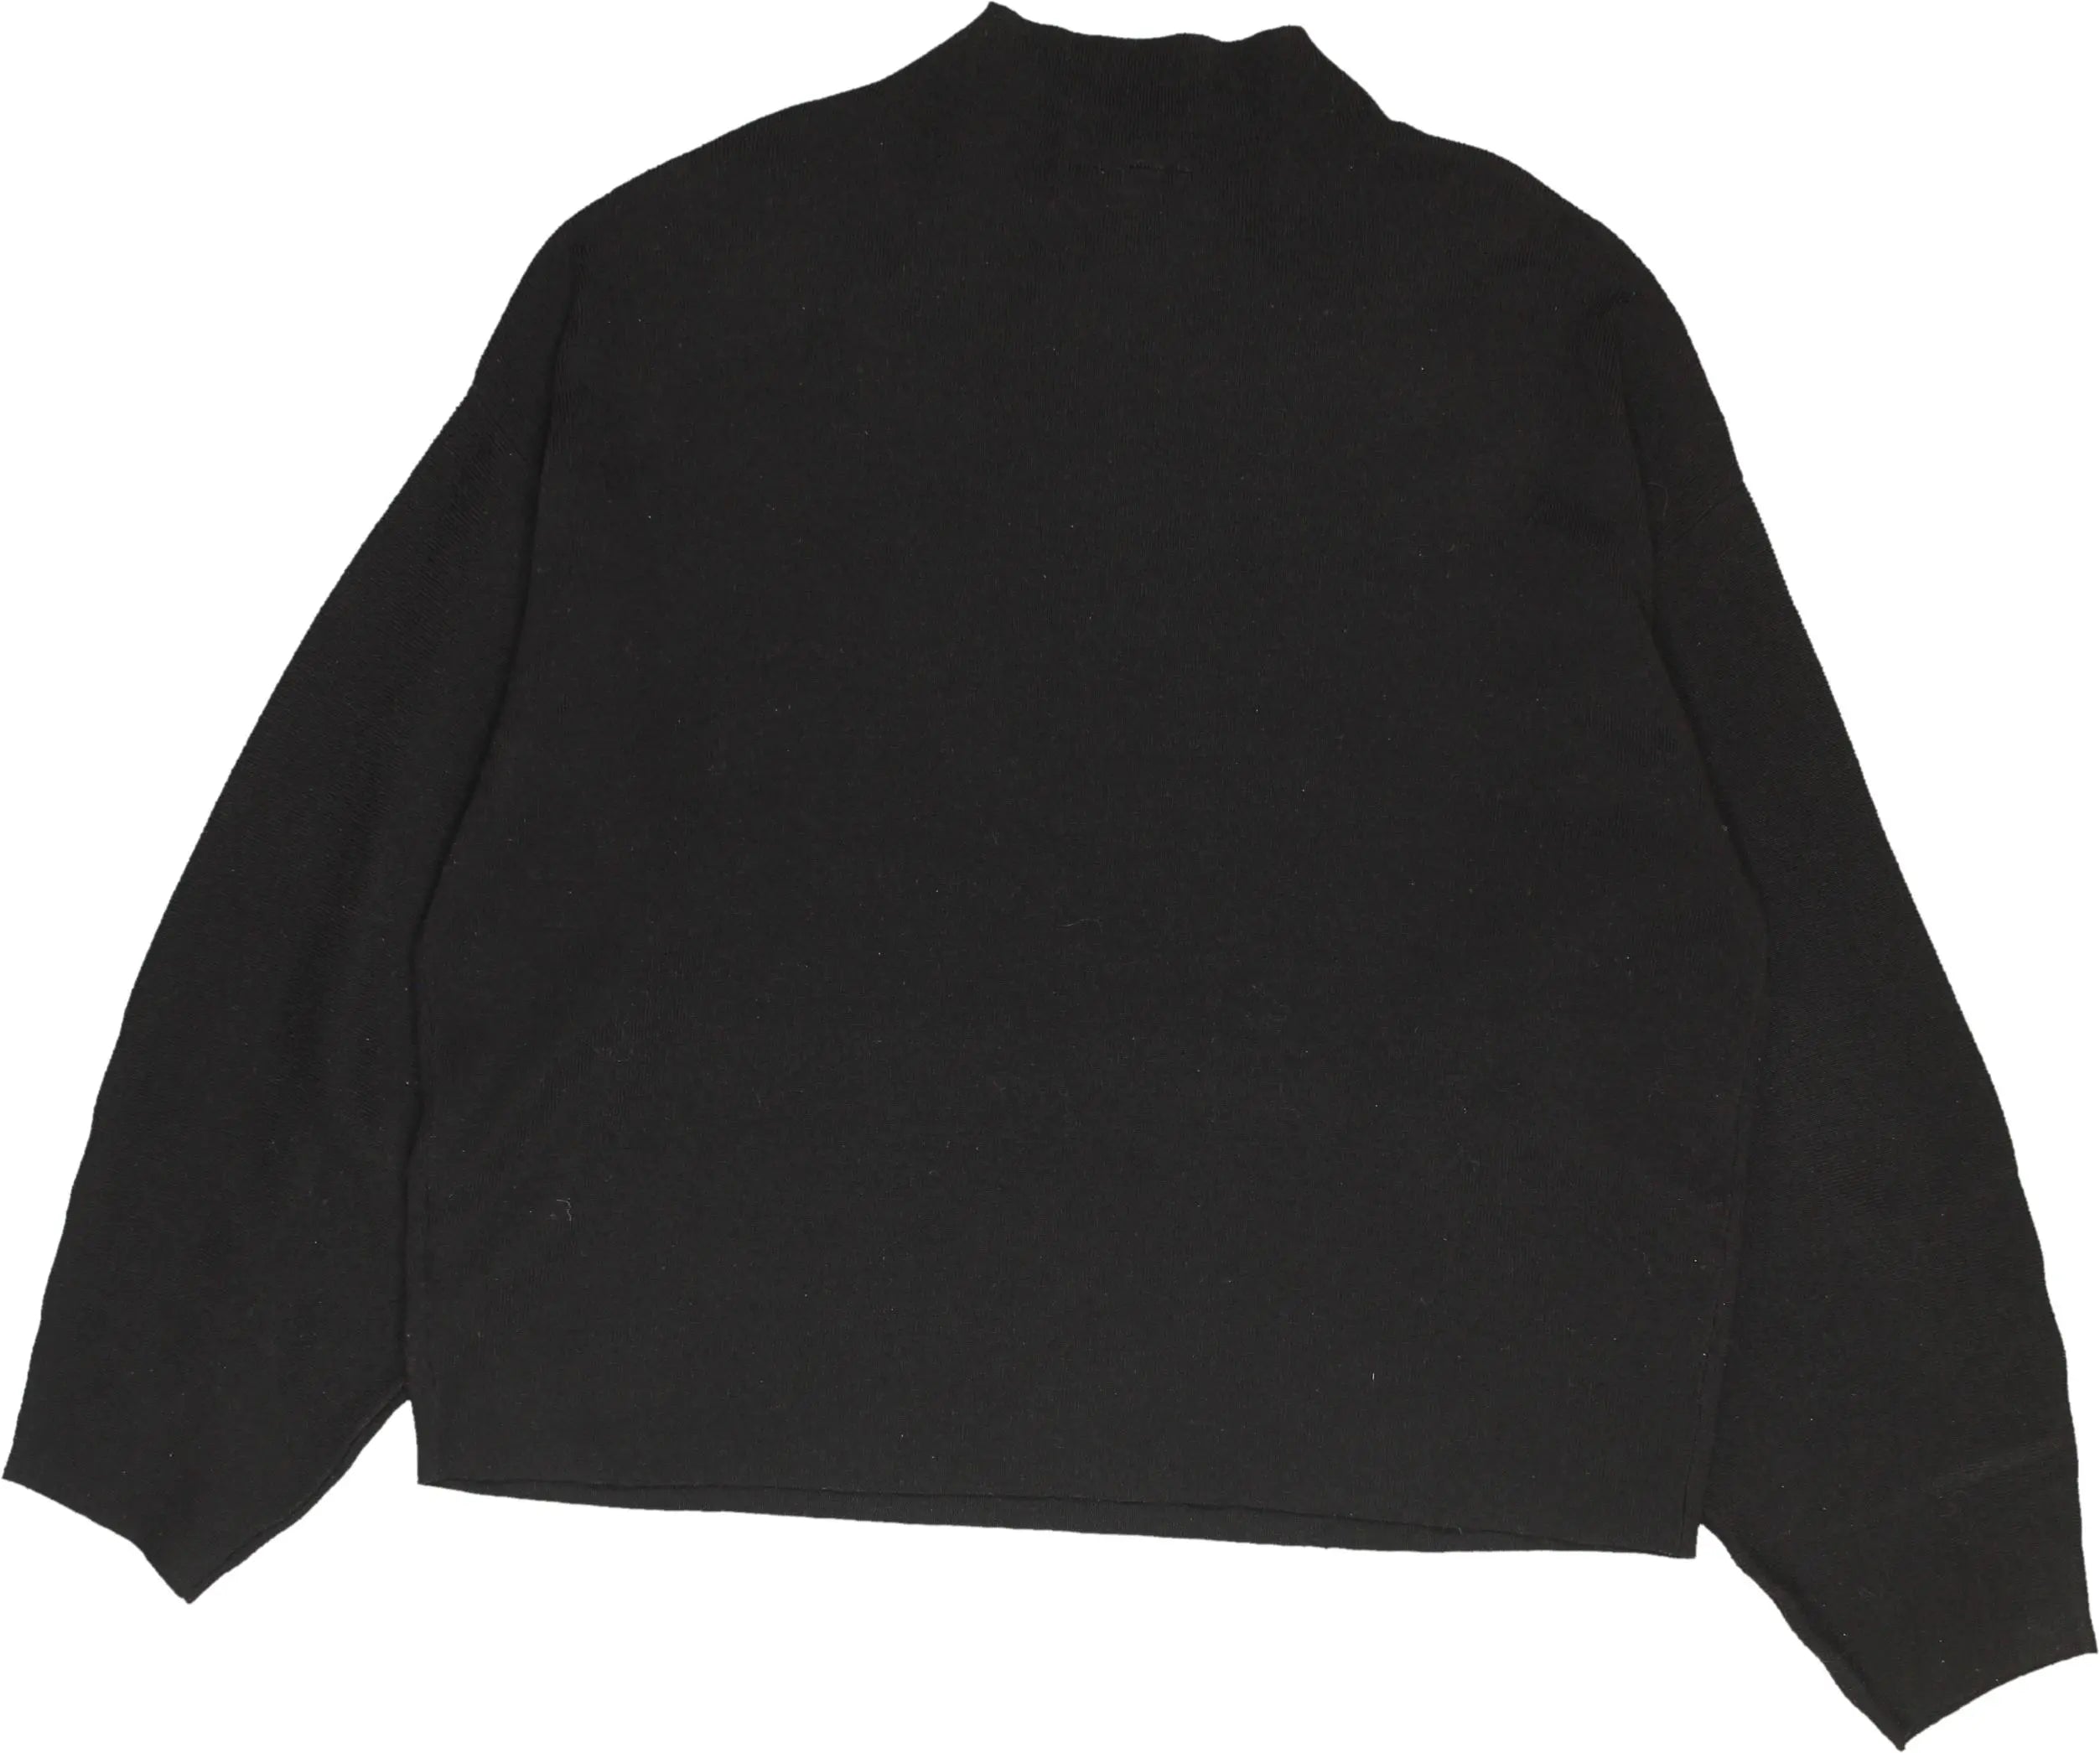 H&M - Black high neck jumper- ThriftTale.com - Vintage and second handclothing